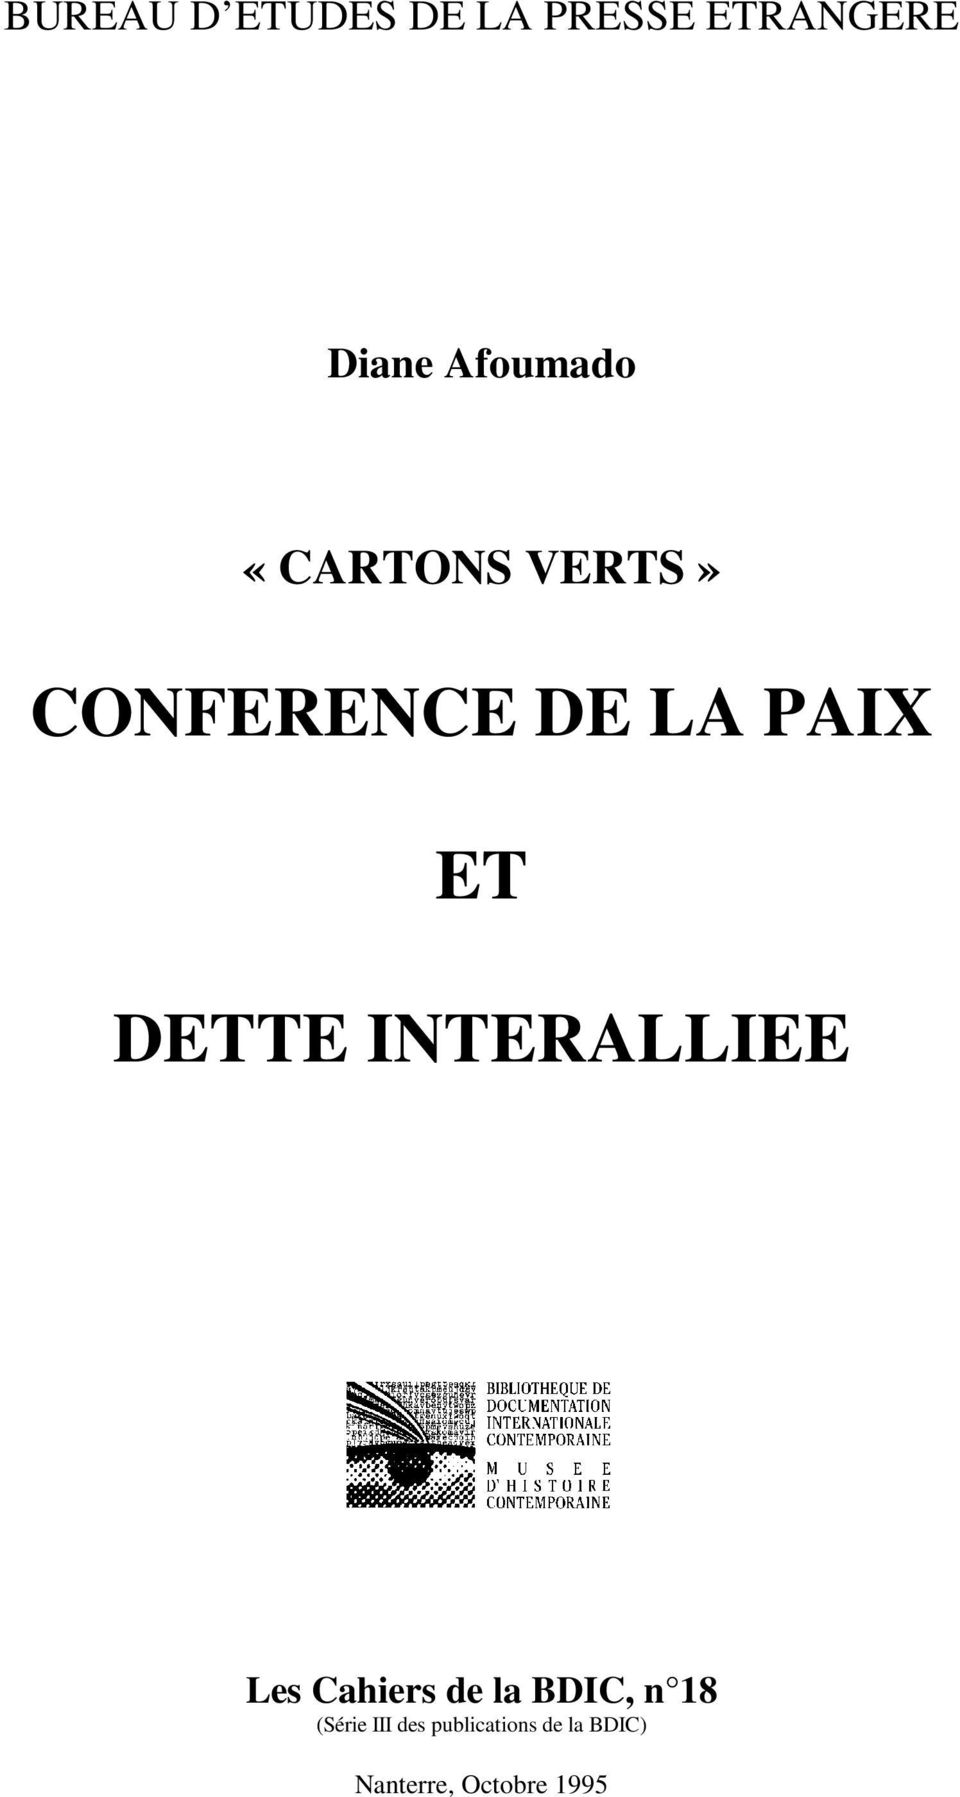 DETTE INTERALLIEE Les Cahiers de la BDIC, n 18